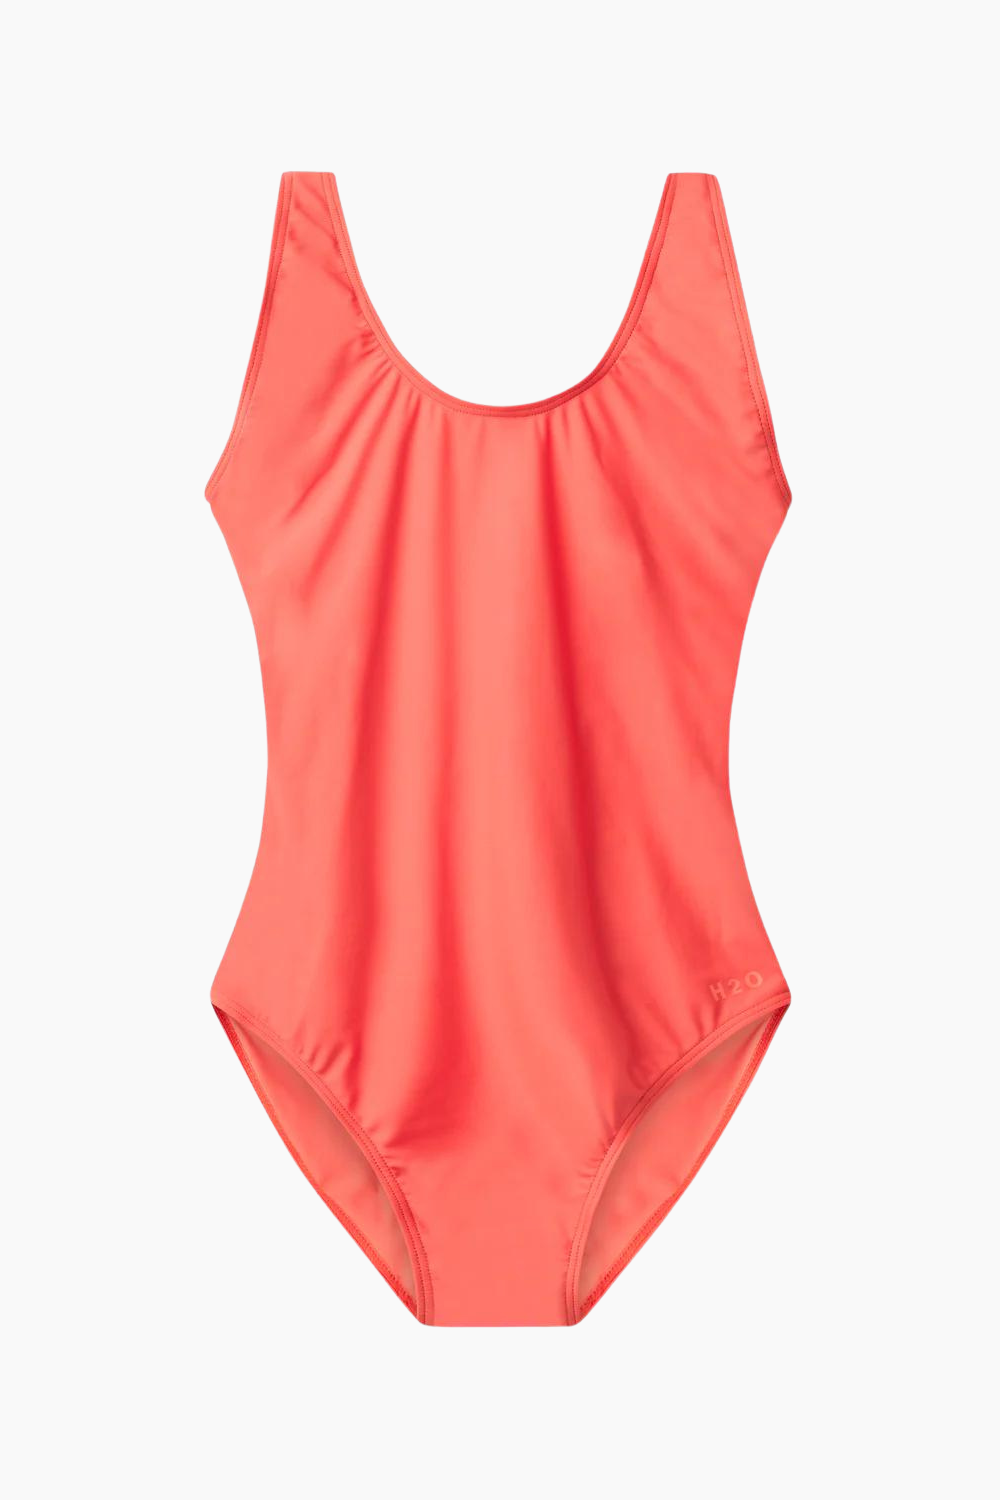 Tornø Swim Suit - Pumpkin - H2O - Orange S